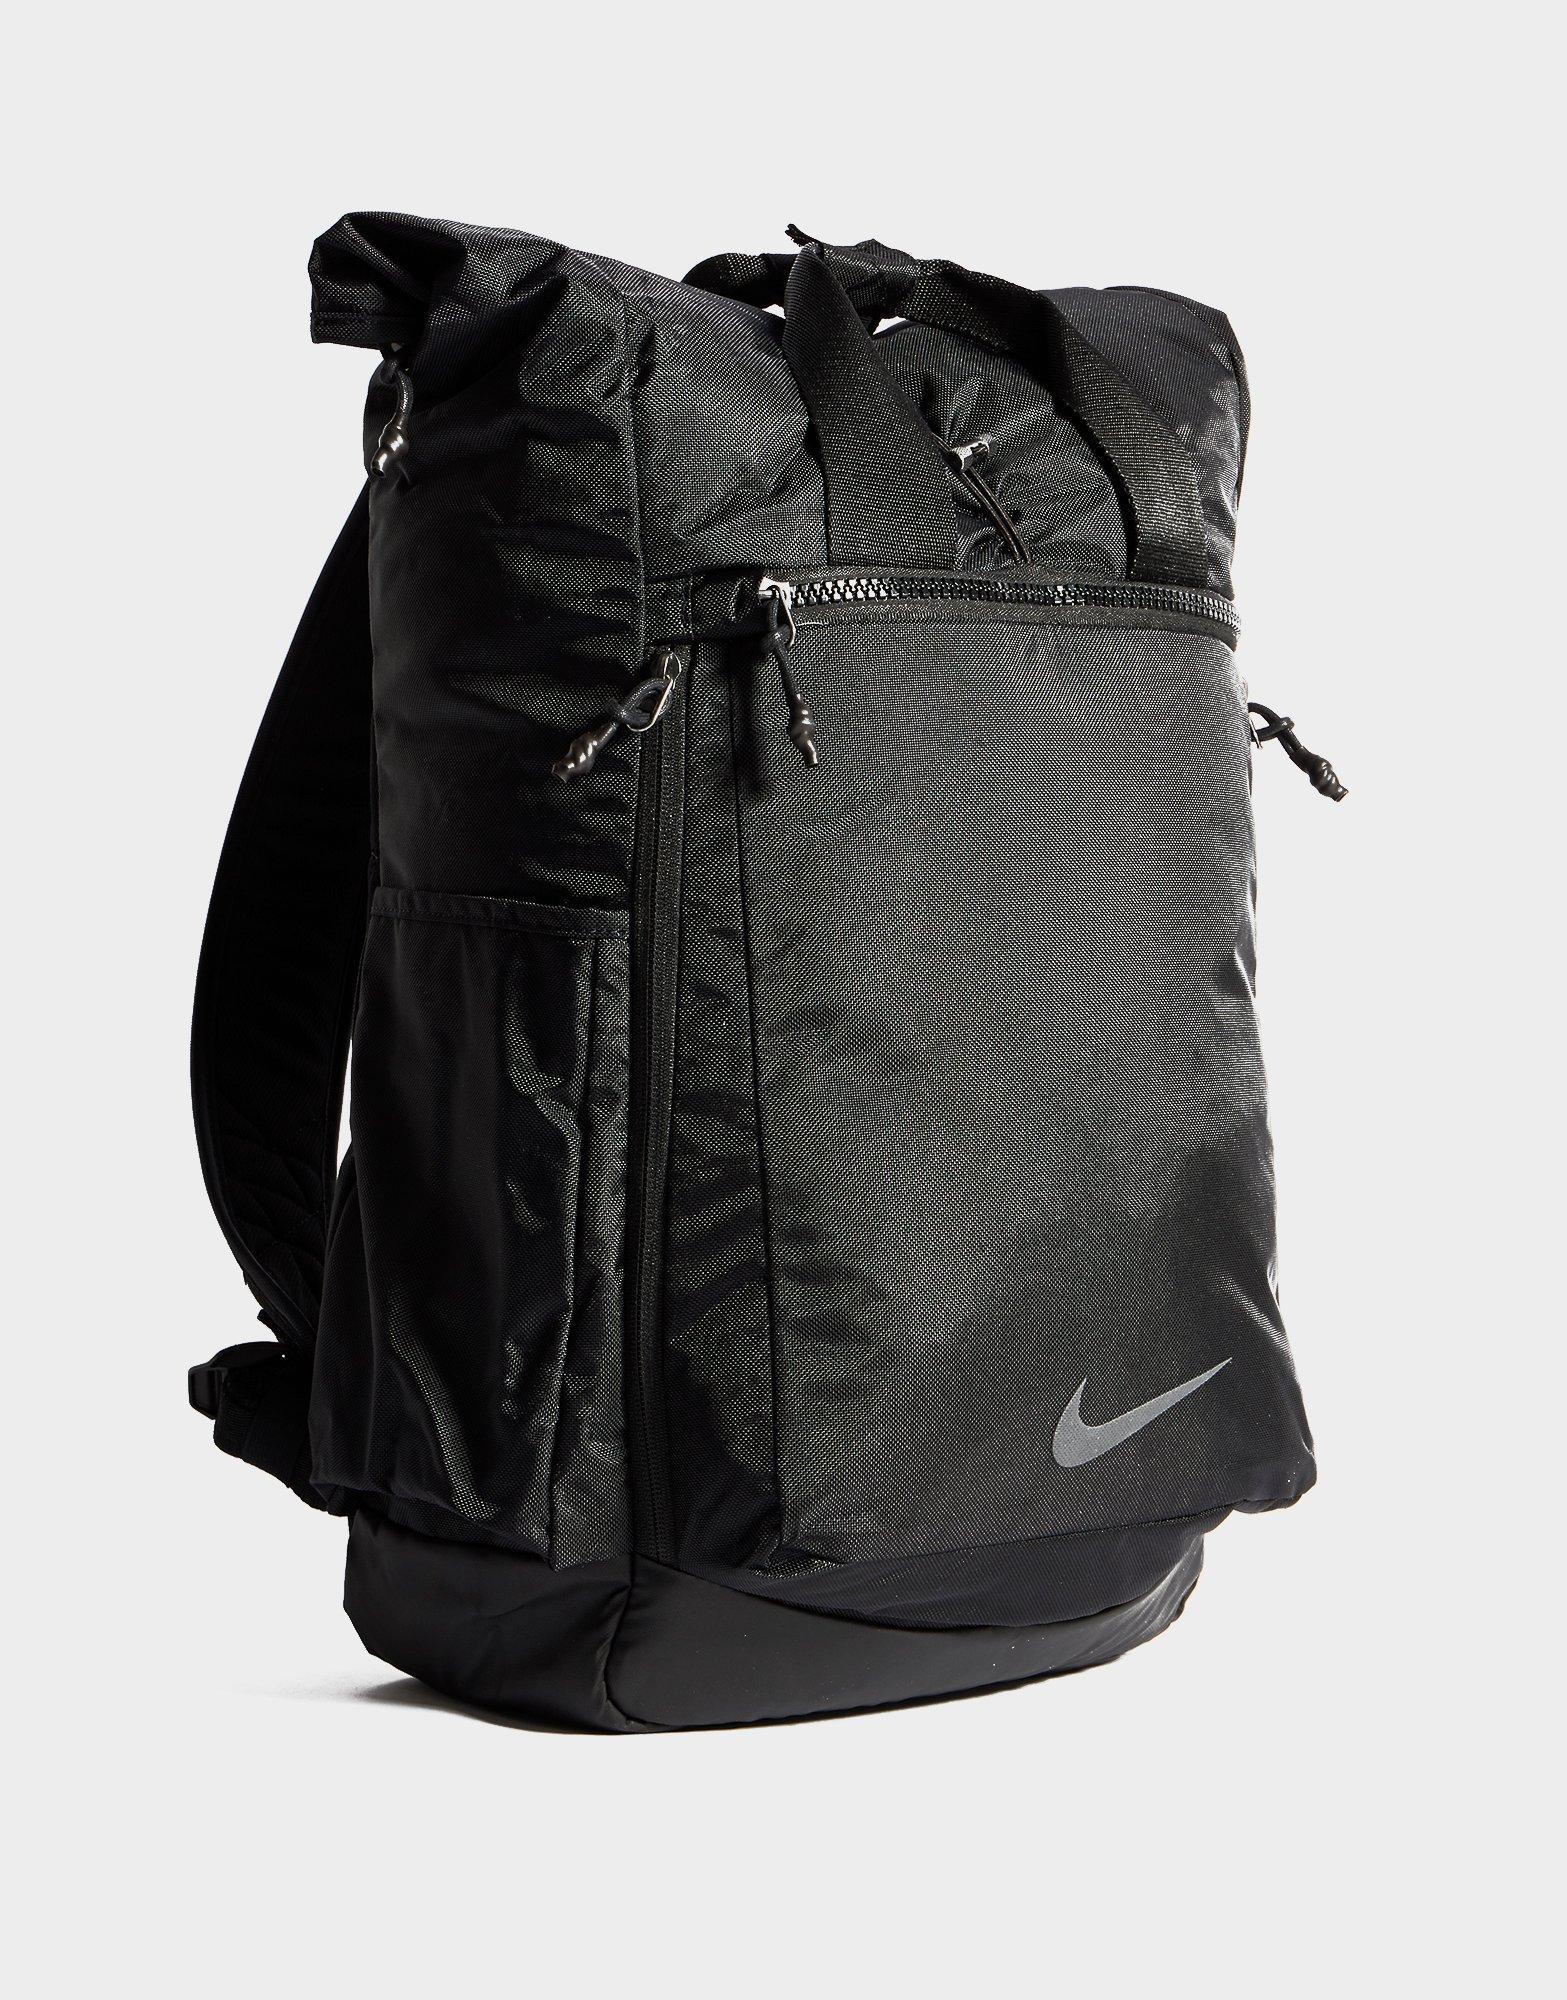 Nike Synthetic Radiate Backpack in Black for Men - Lyst